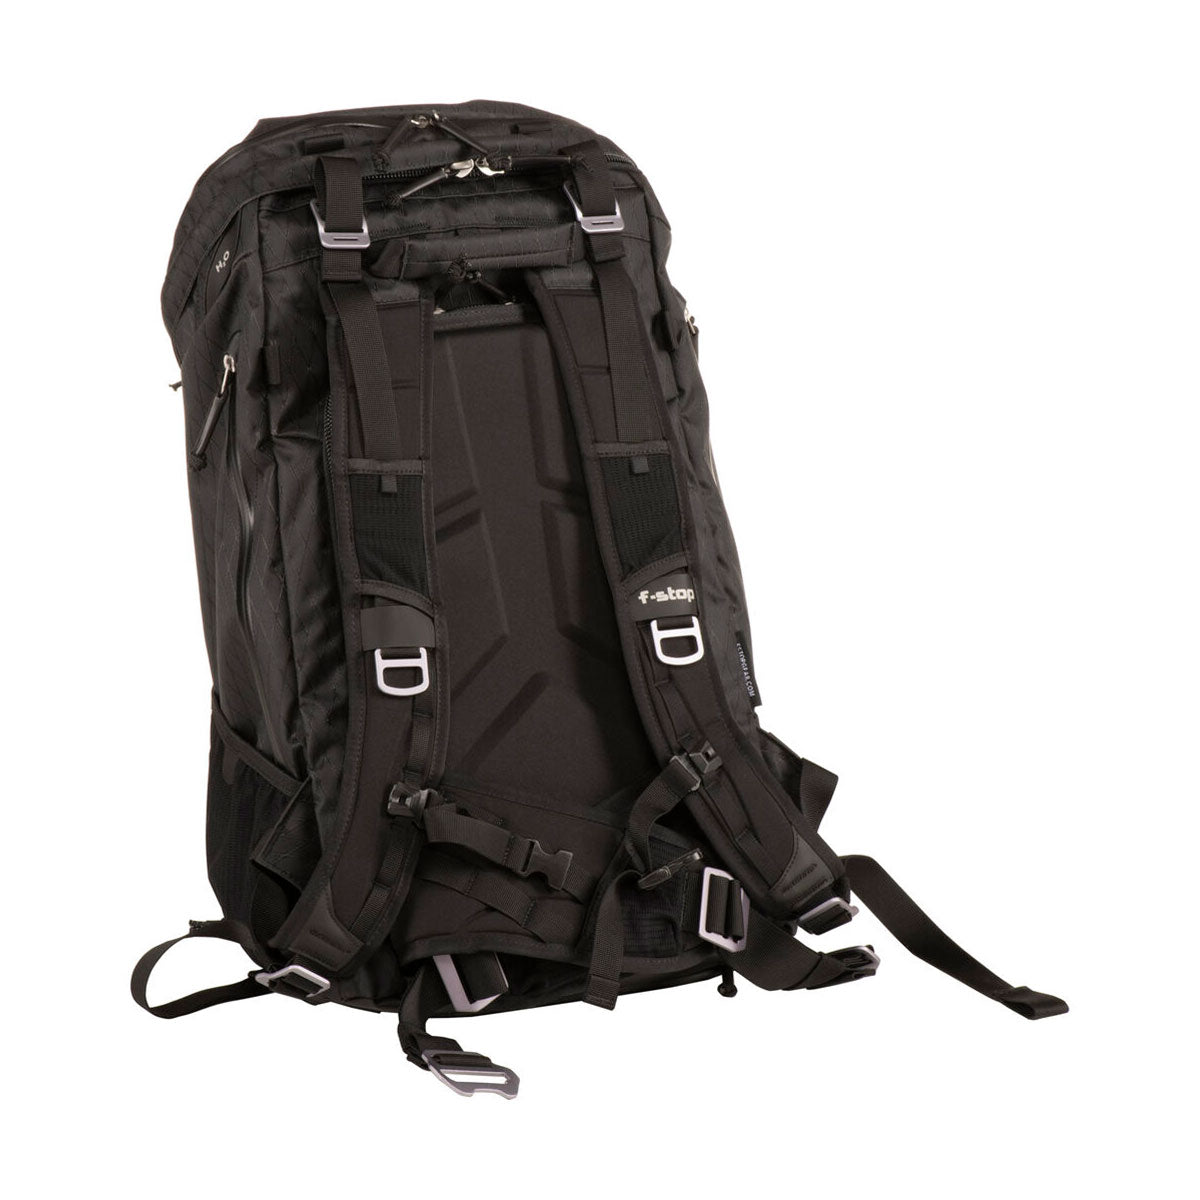 f-stop AJNA 37L DuraDiamond Essential Backpack Bundle (Anthracite Black)